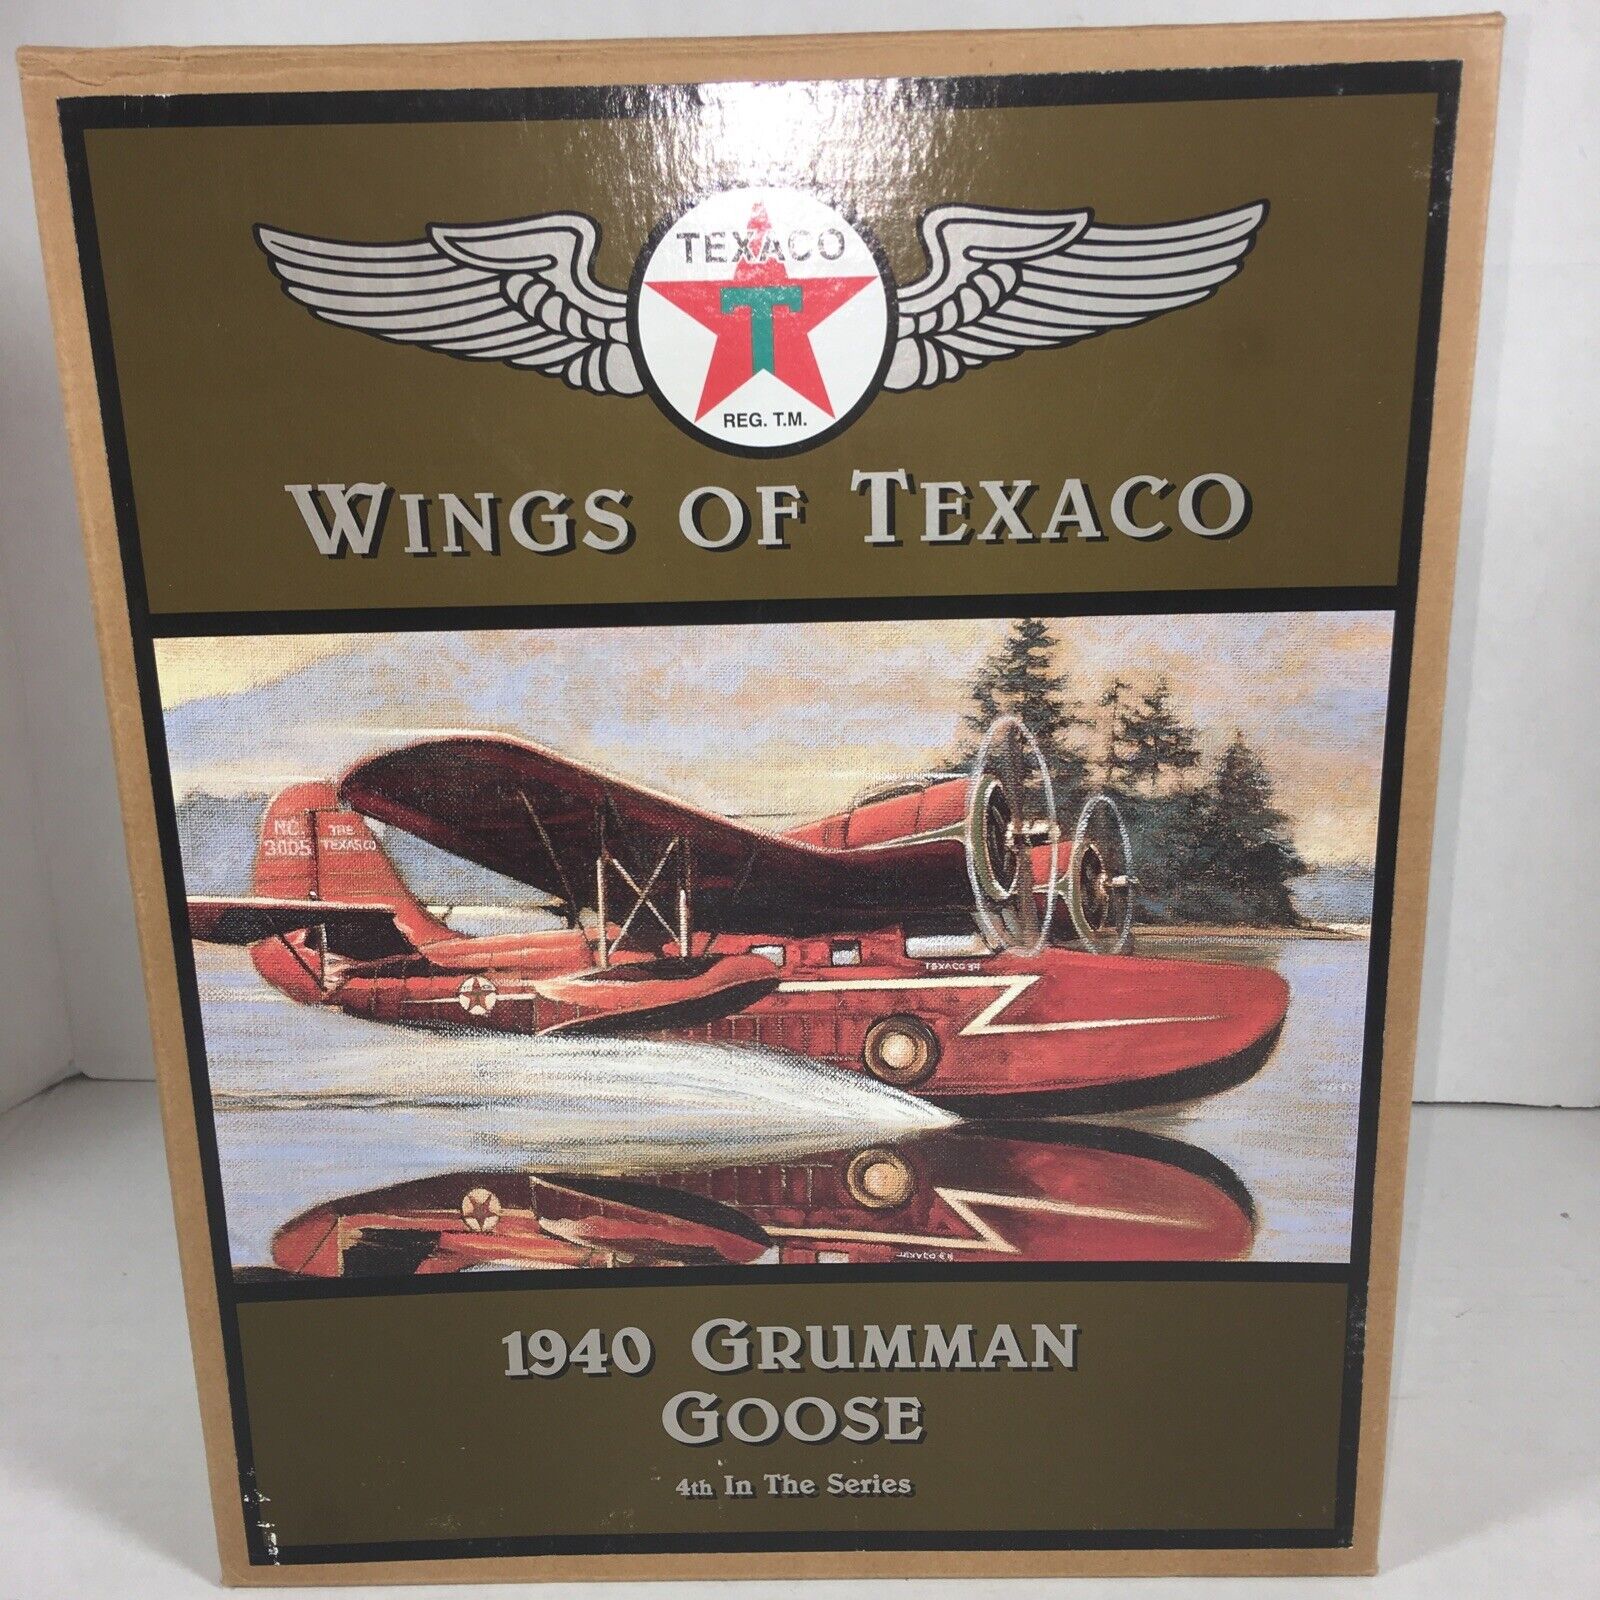 Ertl F900 Wings of Texaco 1940 Grumman Goose Airplane Coin Bank - New In Box 4th